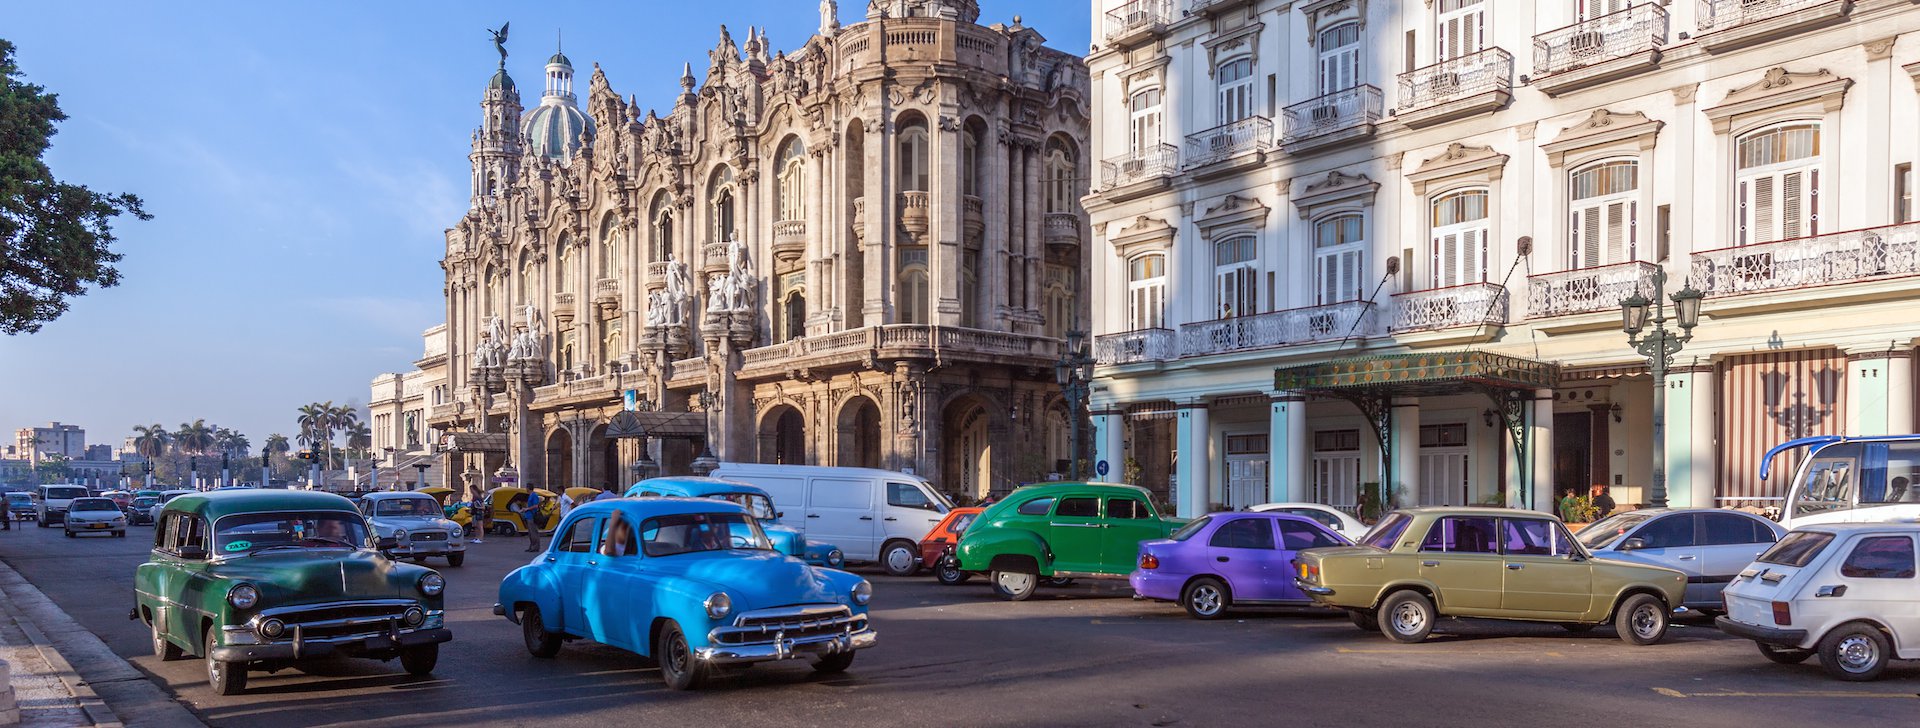 Reiseziele Kuba